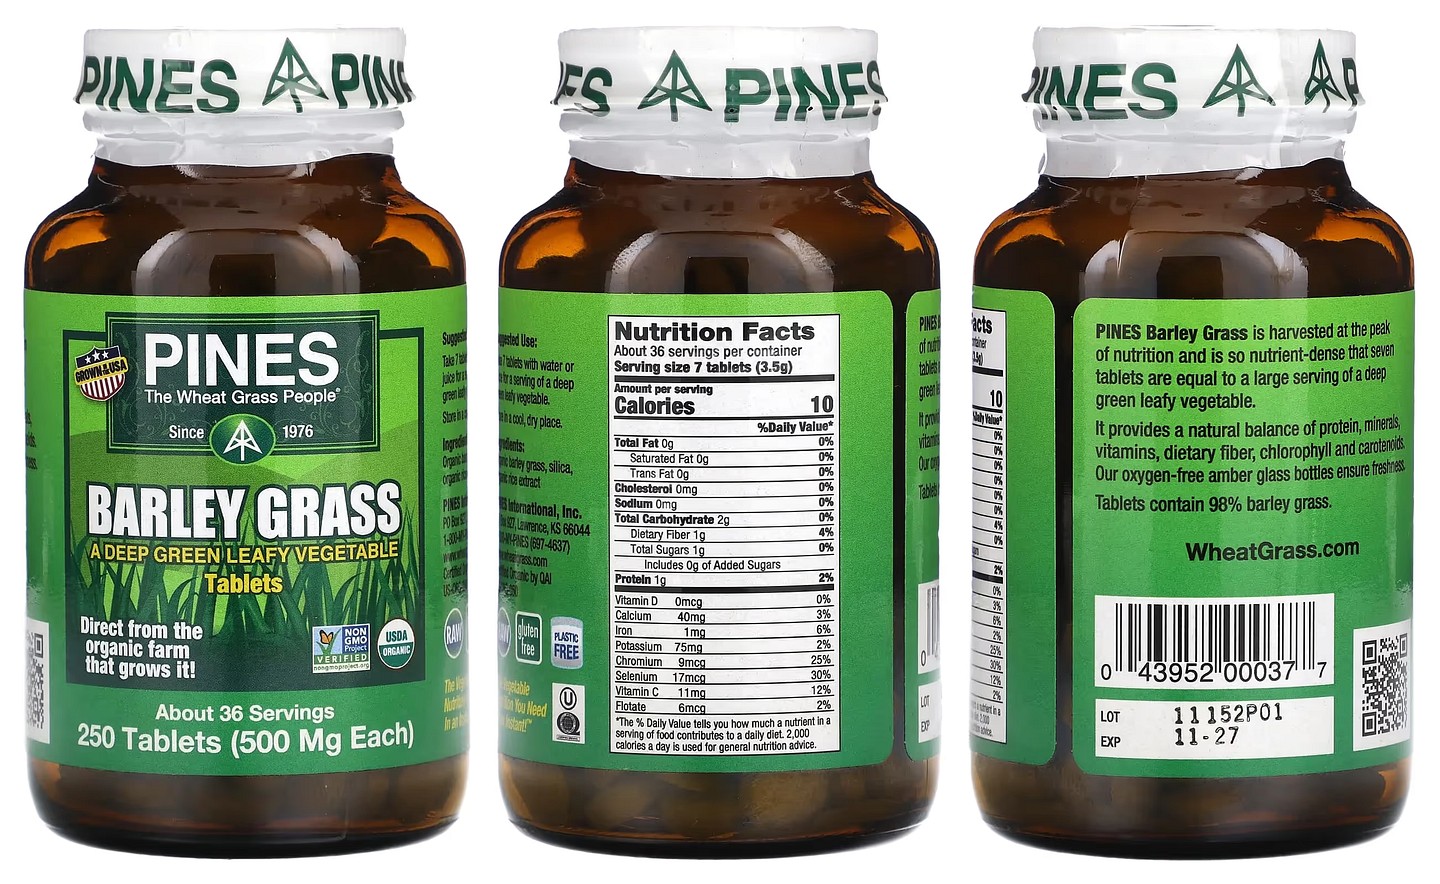 Pines International, Barley Grass packaging